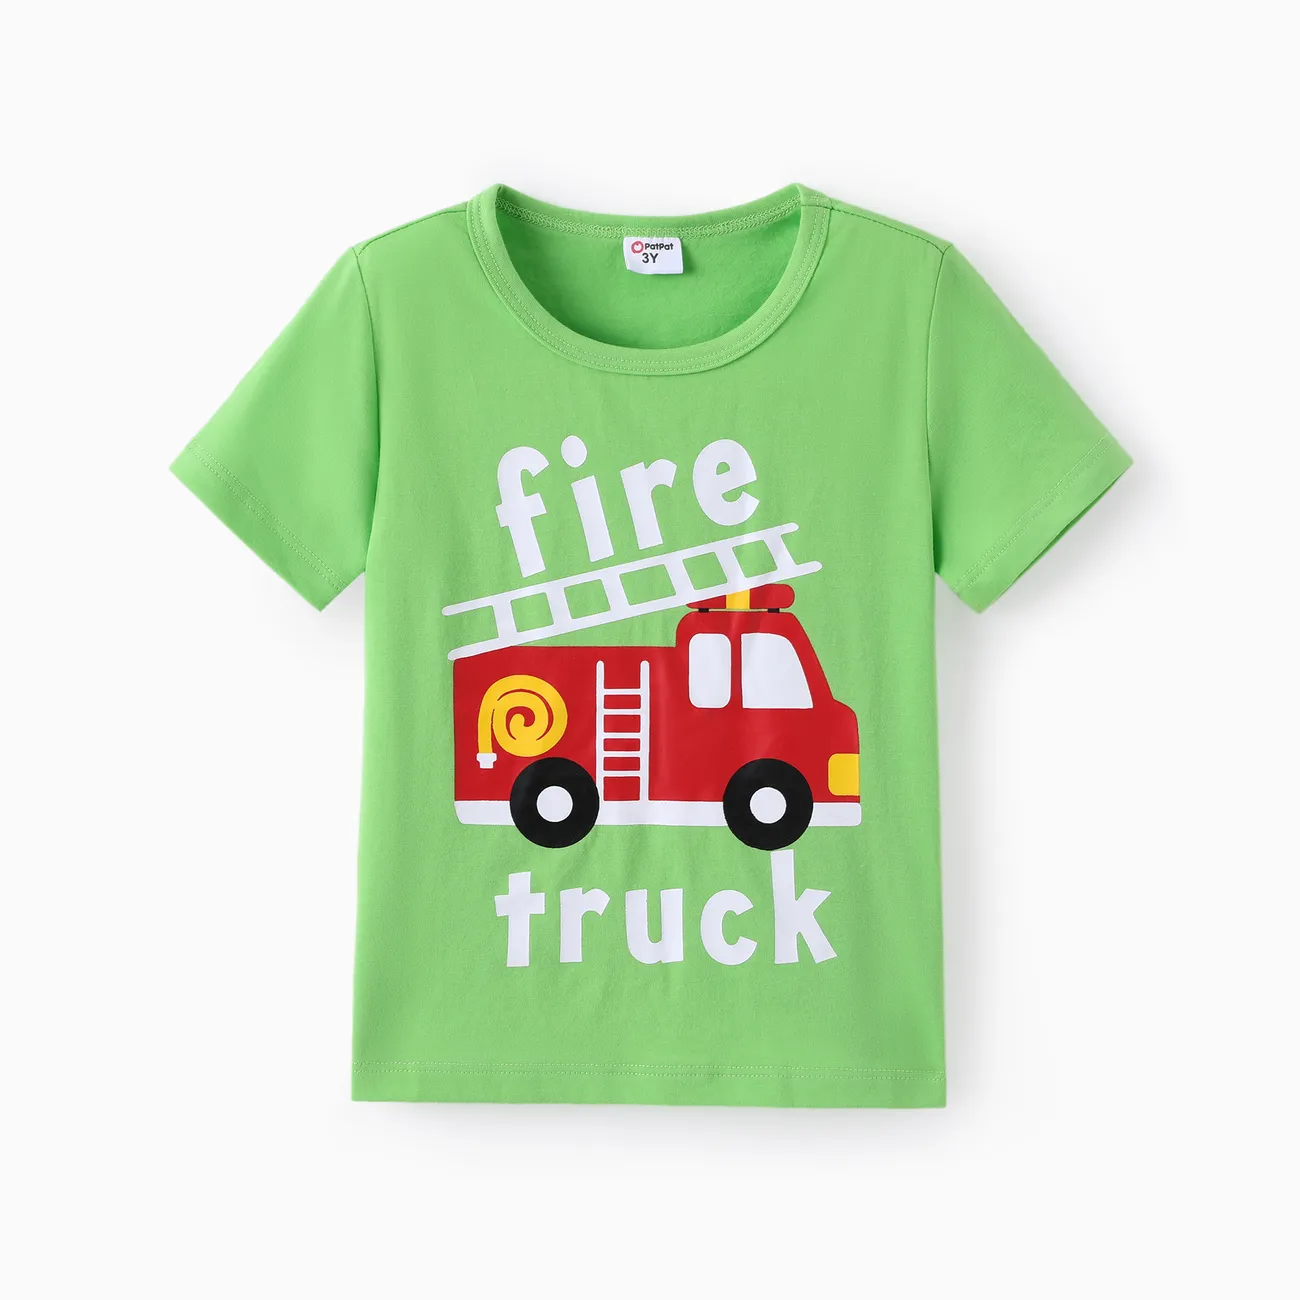 Toddler Boy 2pcs Vehicle Print Tee and Denim Shorts Set Light Green big image 1